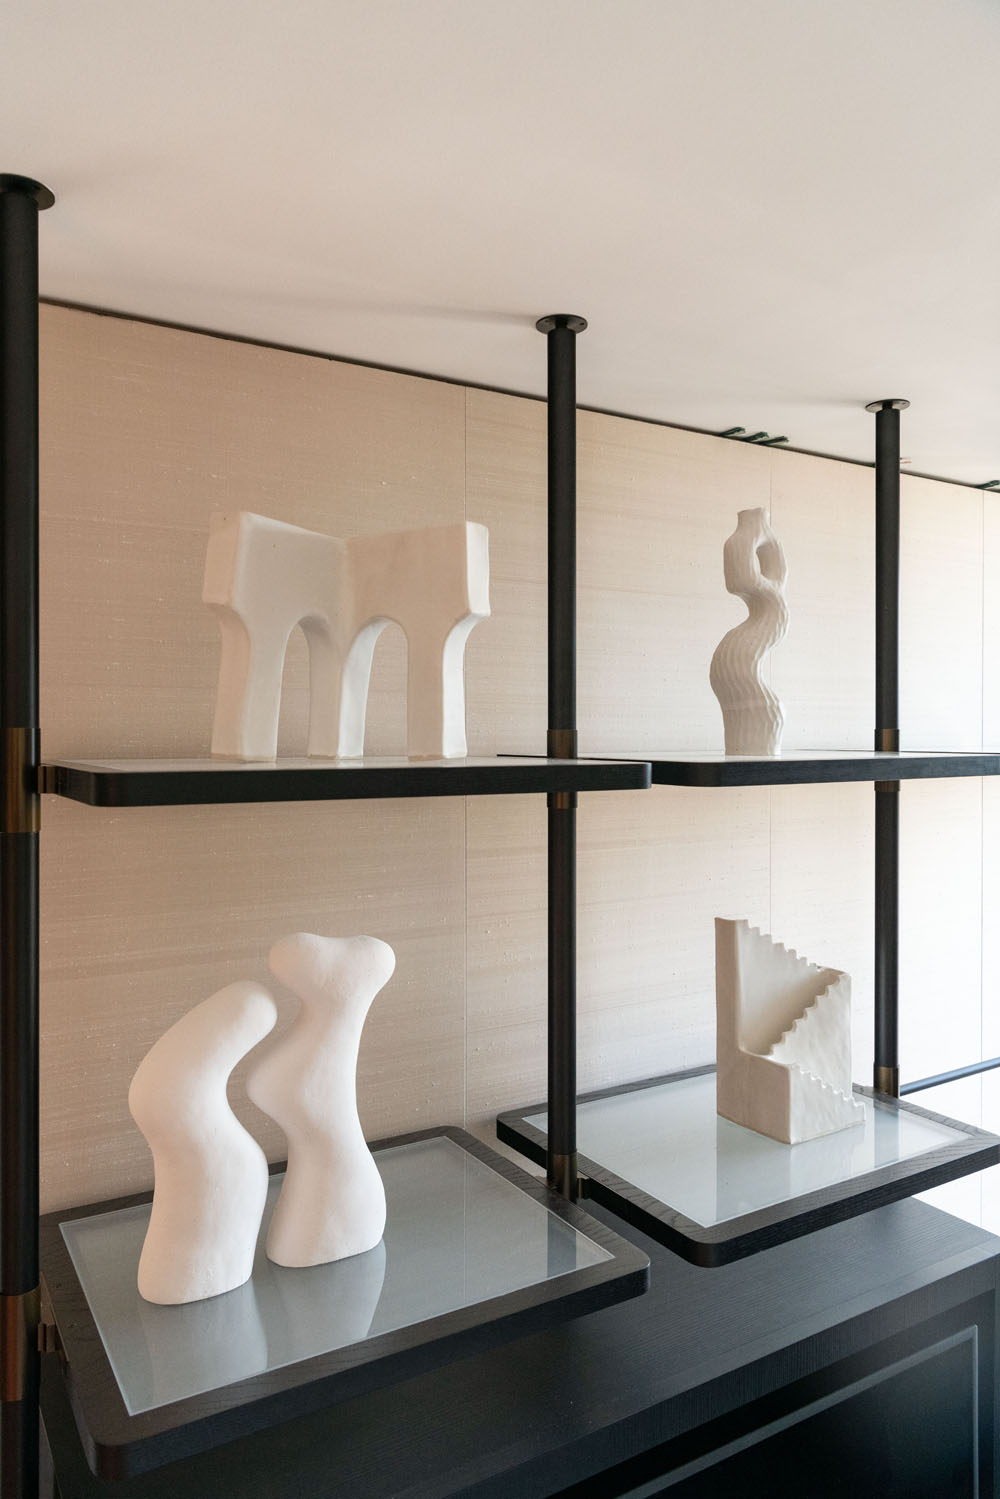 The Star Sydney - hotel room - ceramic sculptures on shelf